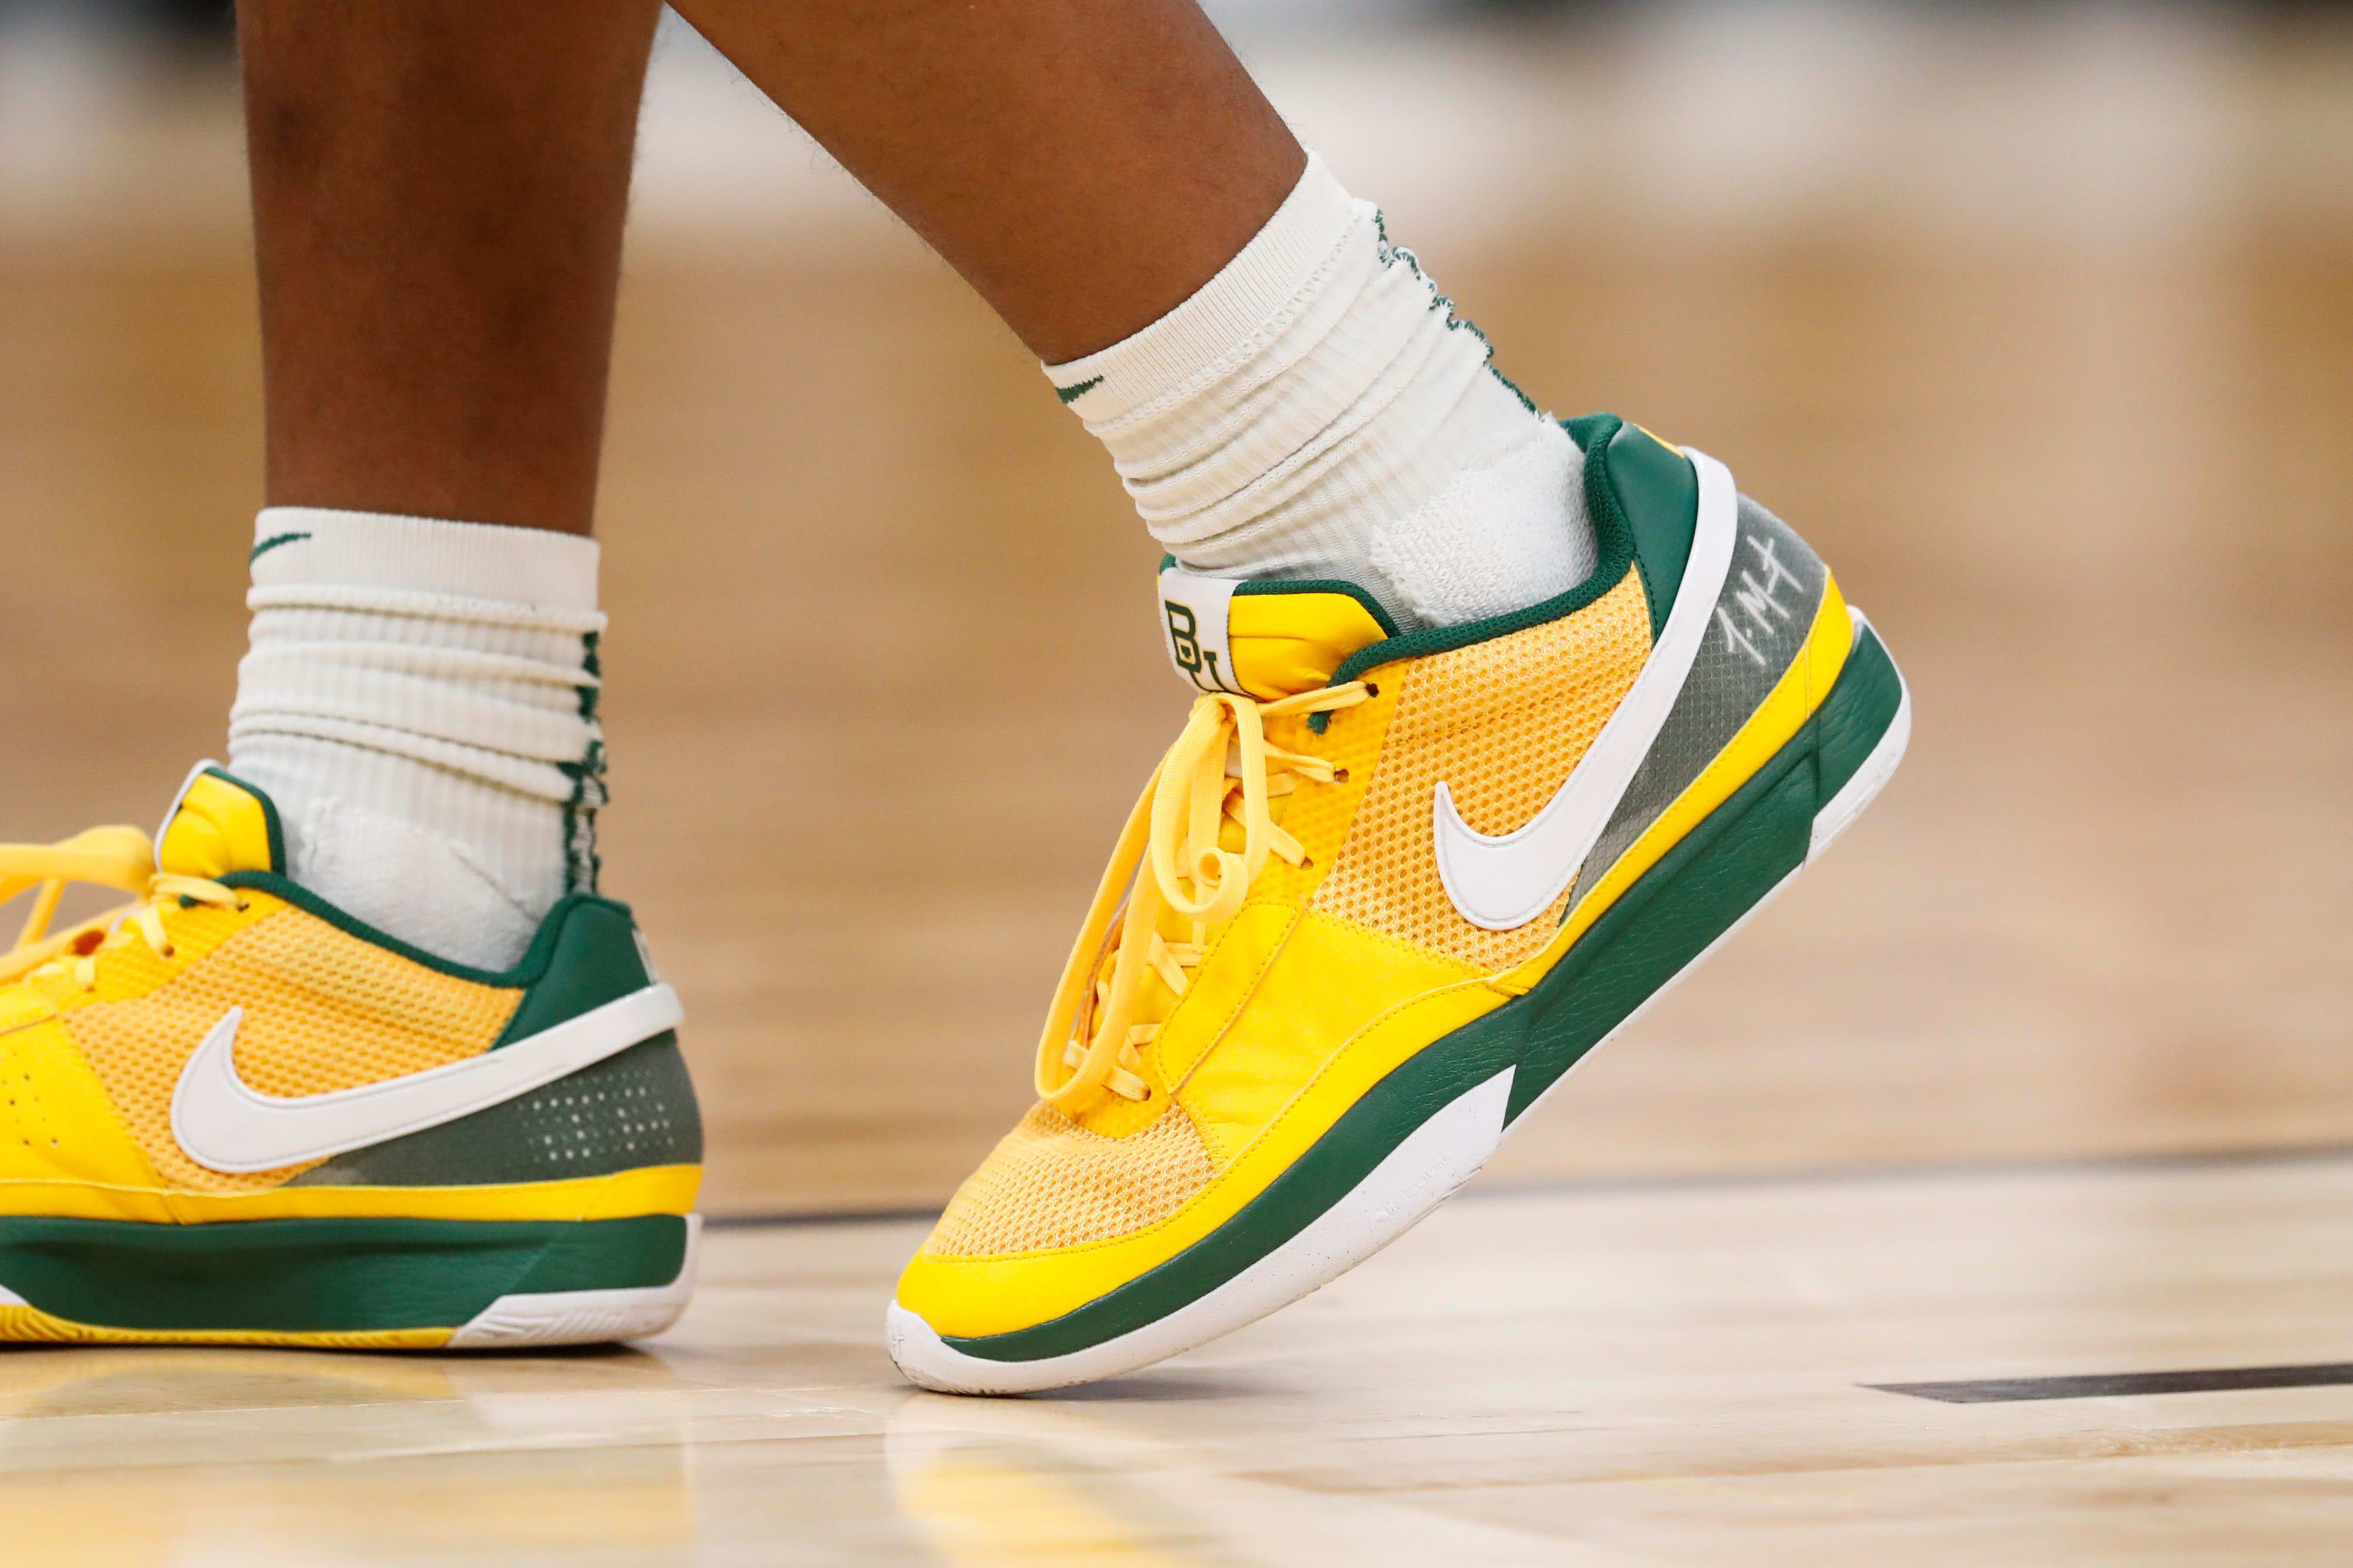 Baylor Bears guard Ja'Kobe Walter's yellow and green Nike sneakers.